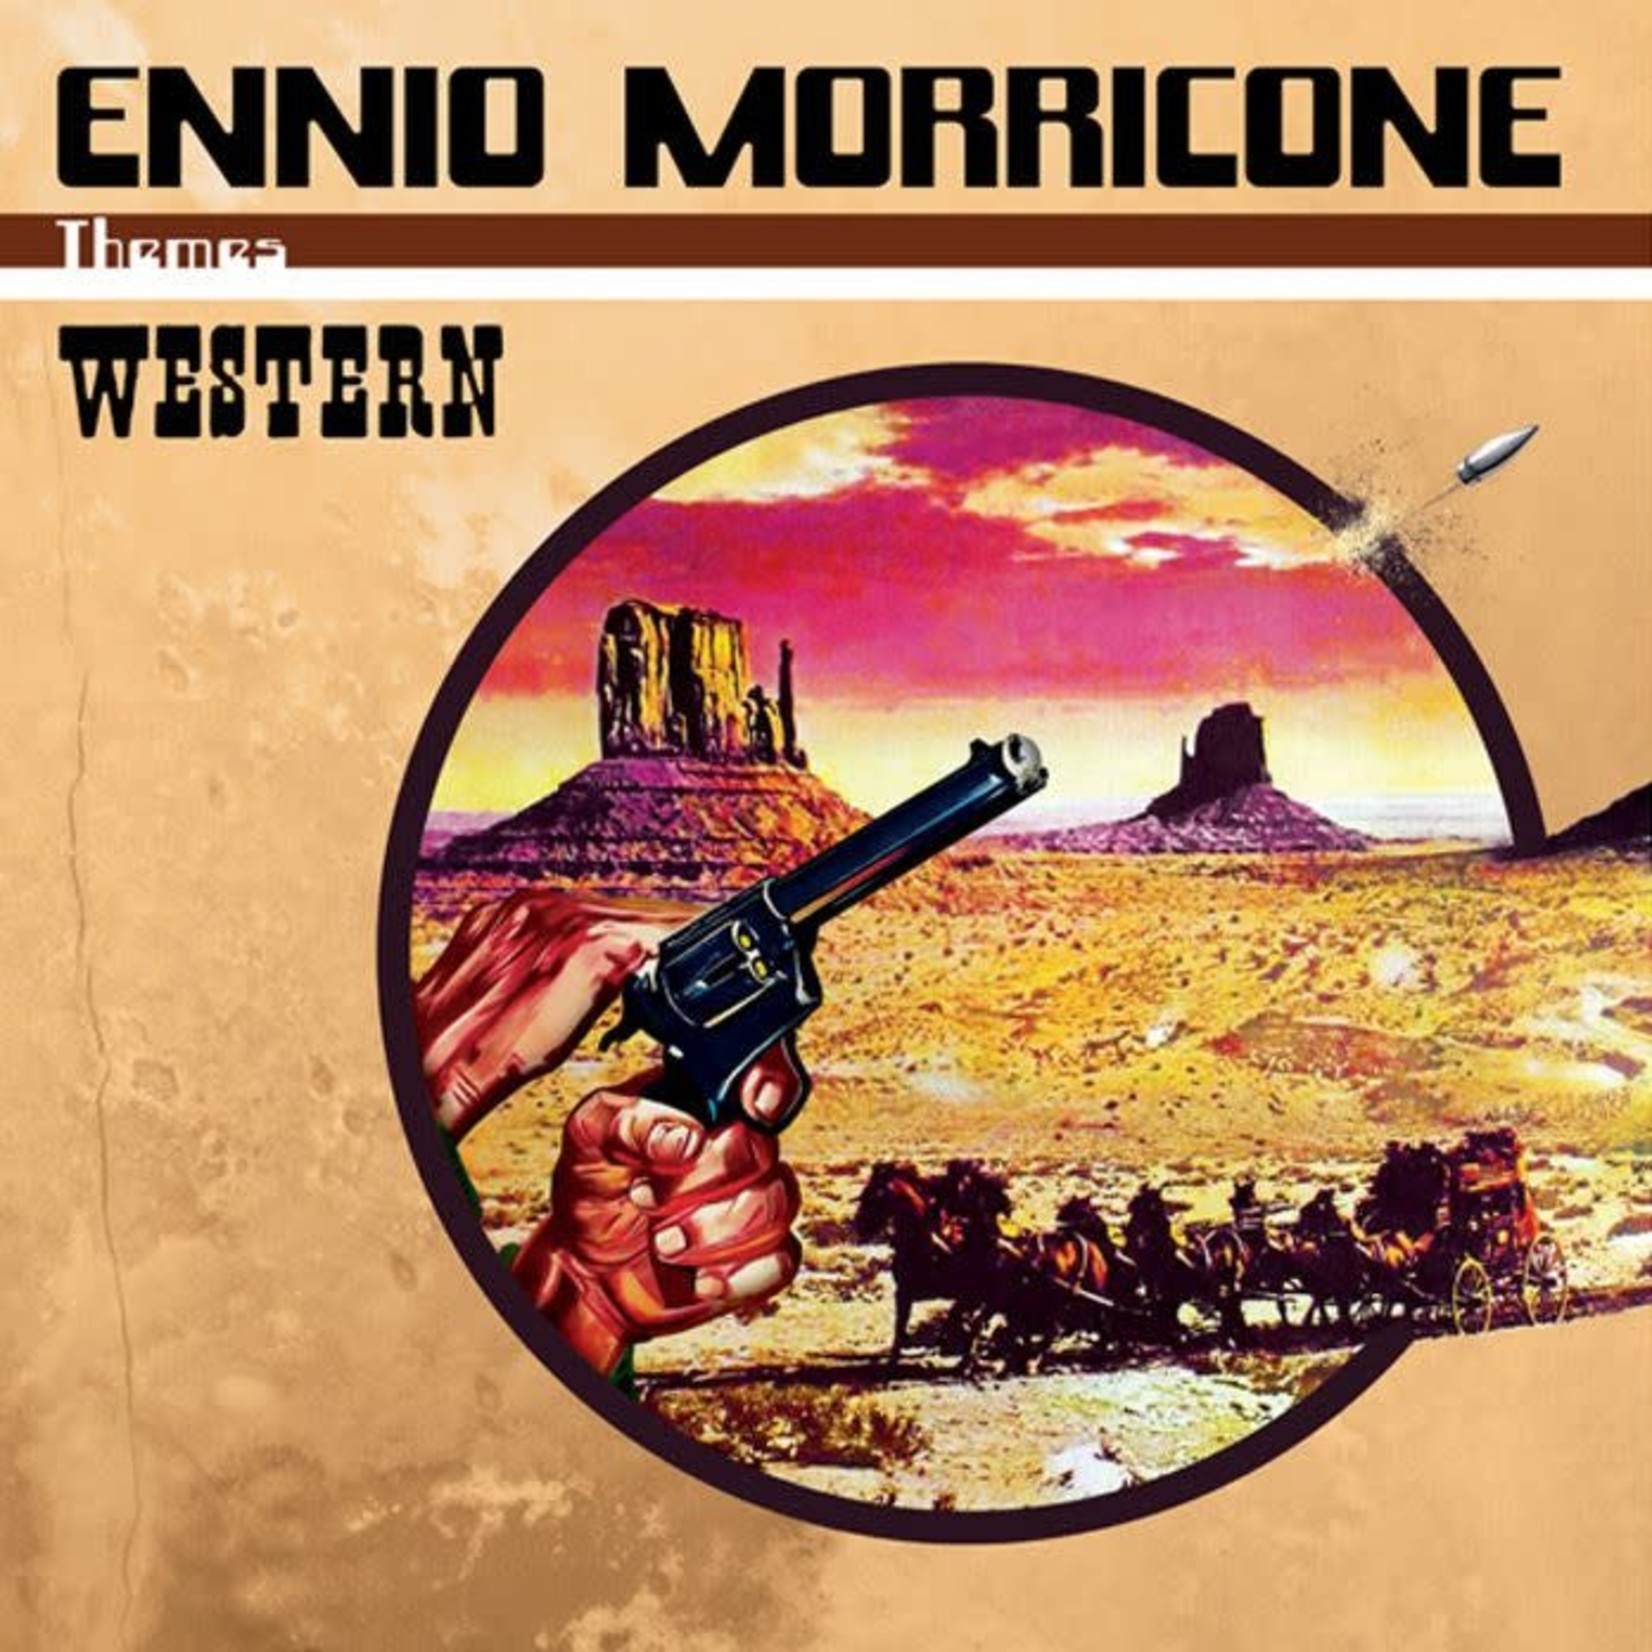 [New] Ennio Morricone - Western - Themes (2LP, red & silver marbled vinyl)